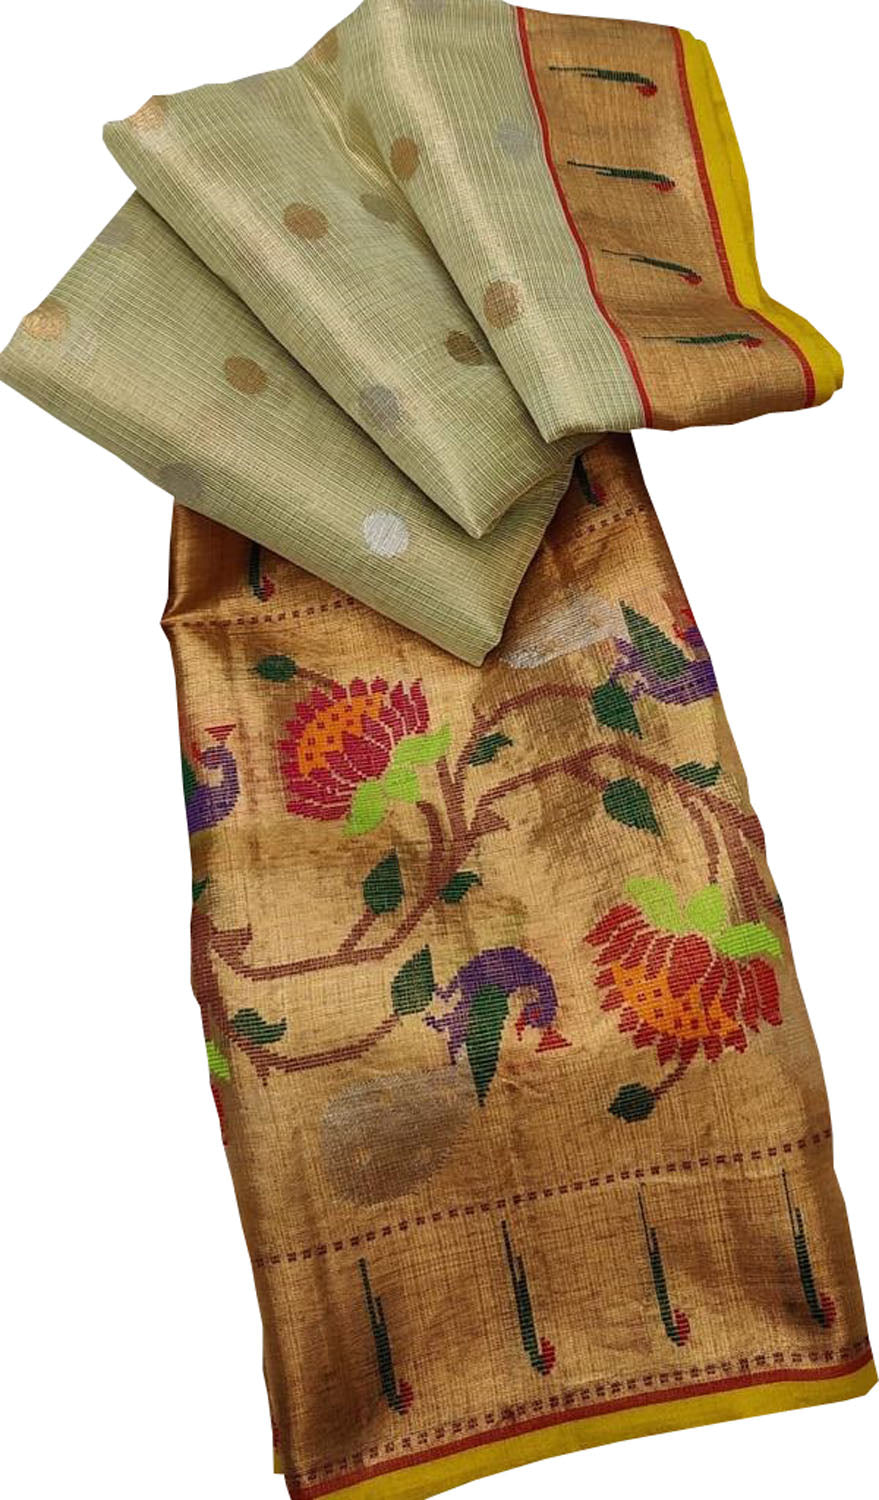 Shop Now for Green Kota Doria Saree with Real Zari & Muniya Border - Ethnic Wear for Women - Luxurion World